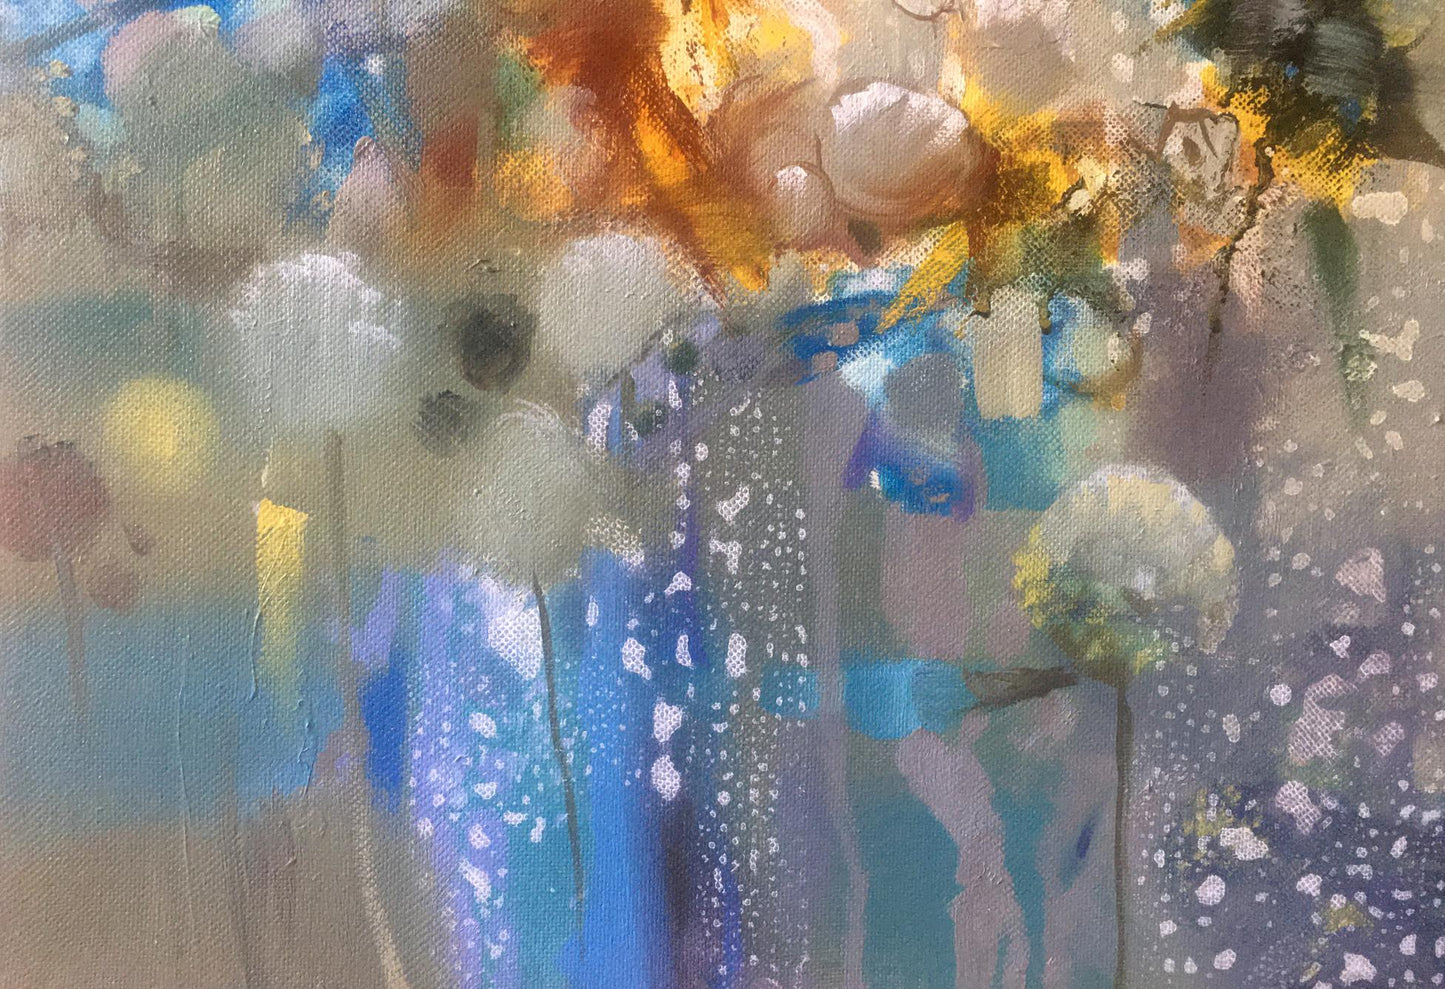 Abstract oil painting Flowers Anatoly Borisovich Tarabanov